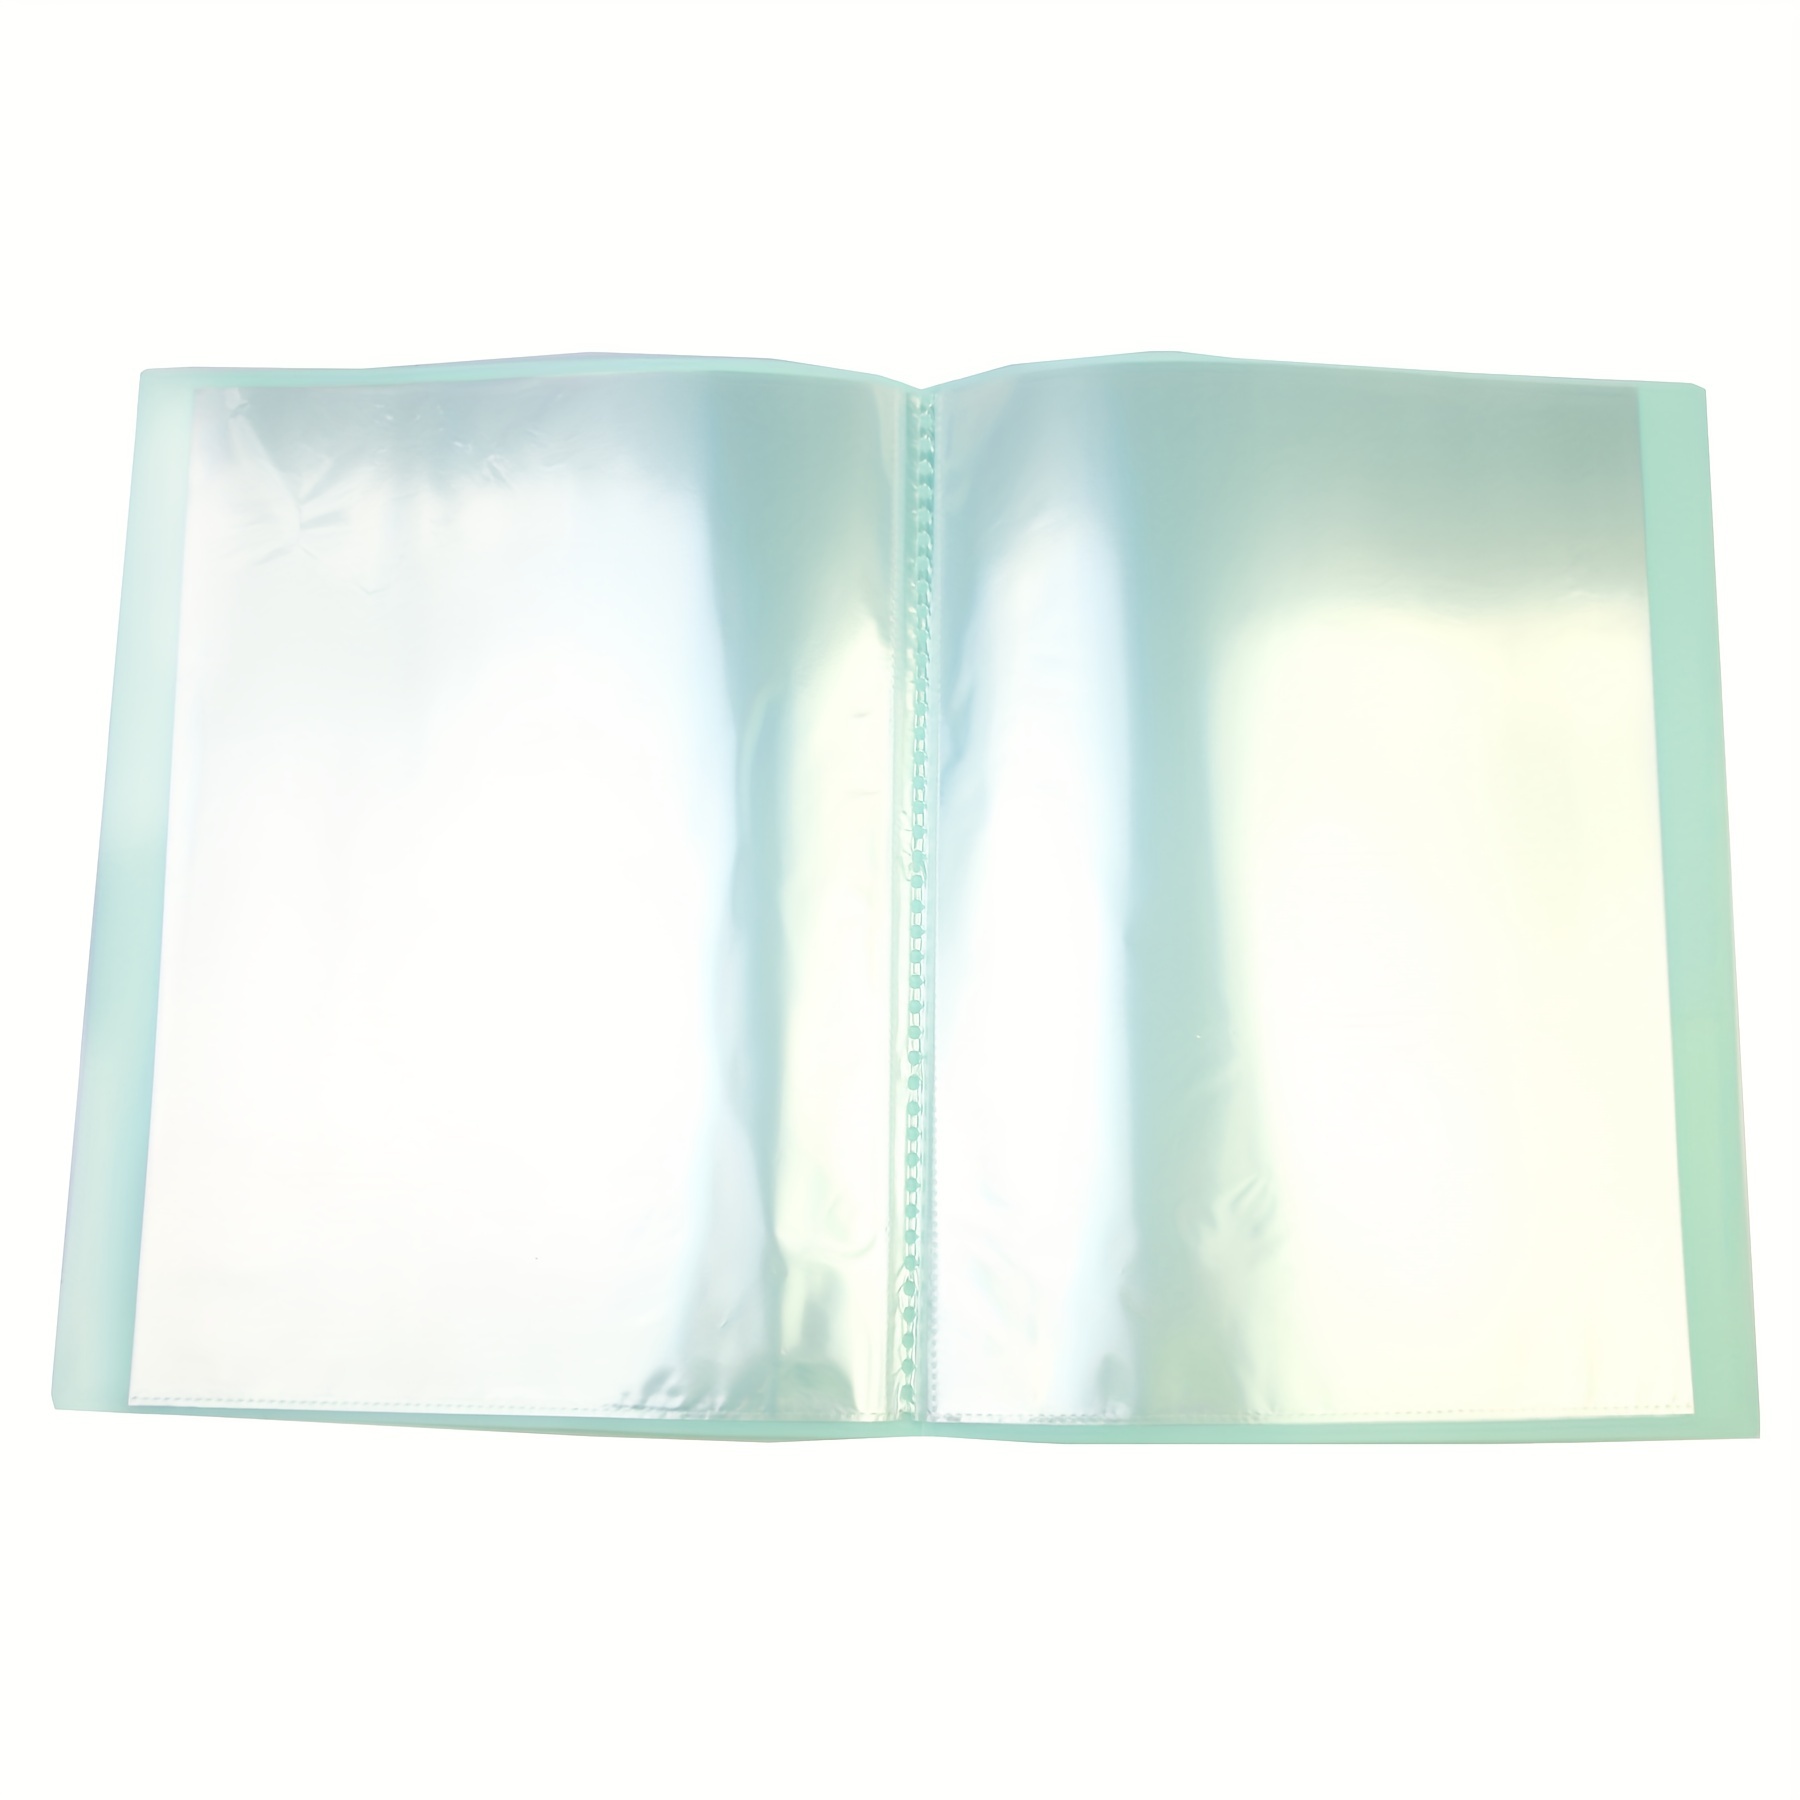 Presentation Book 3 Packs Art Portfolio Binder with Plastic Sleeves 9x12 Portfolio Folder with Artwork Sheet Protectors for Documents 30 Pockets